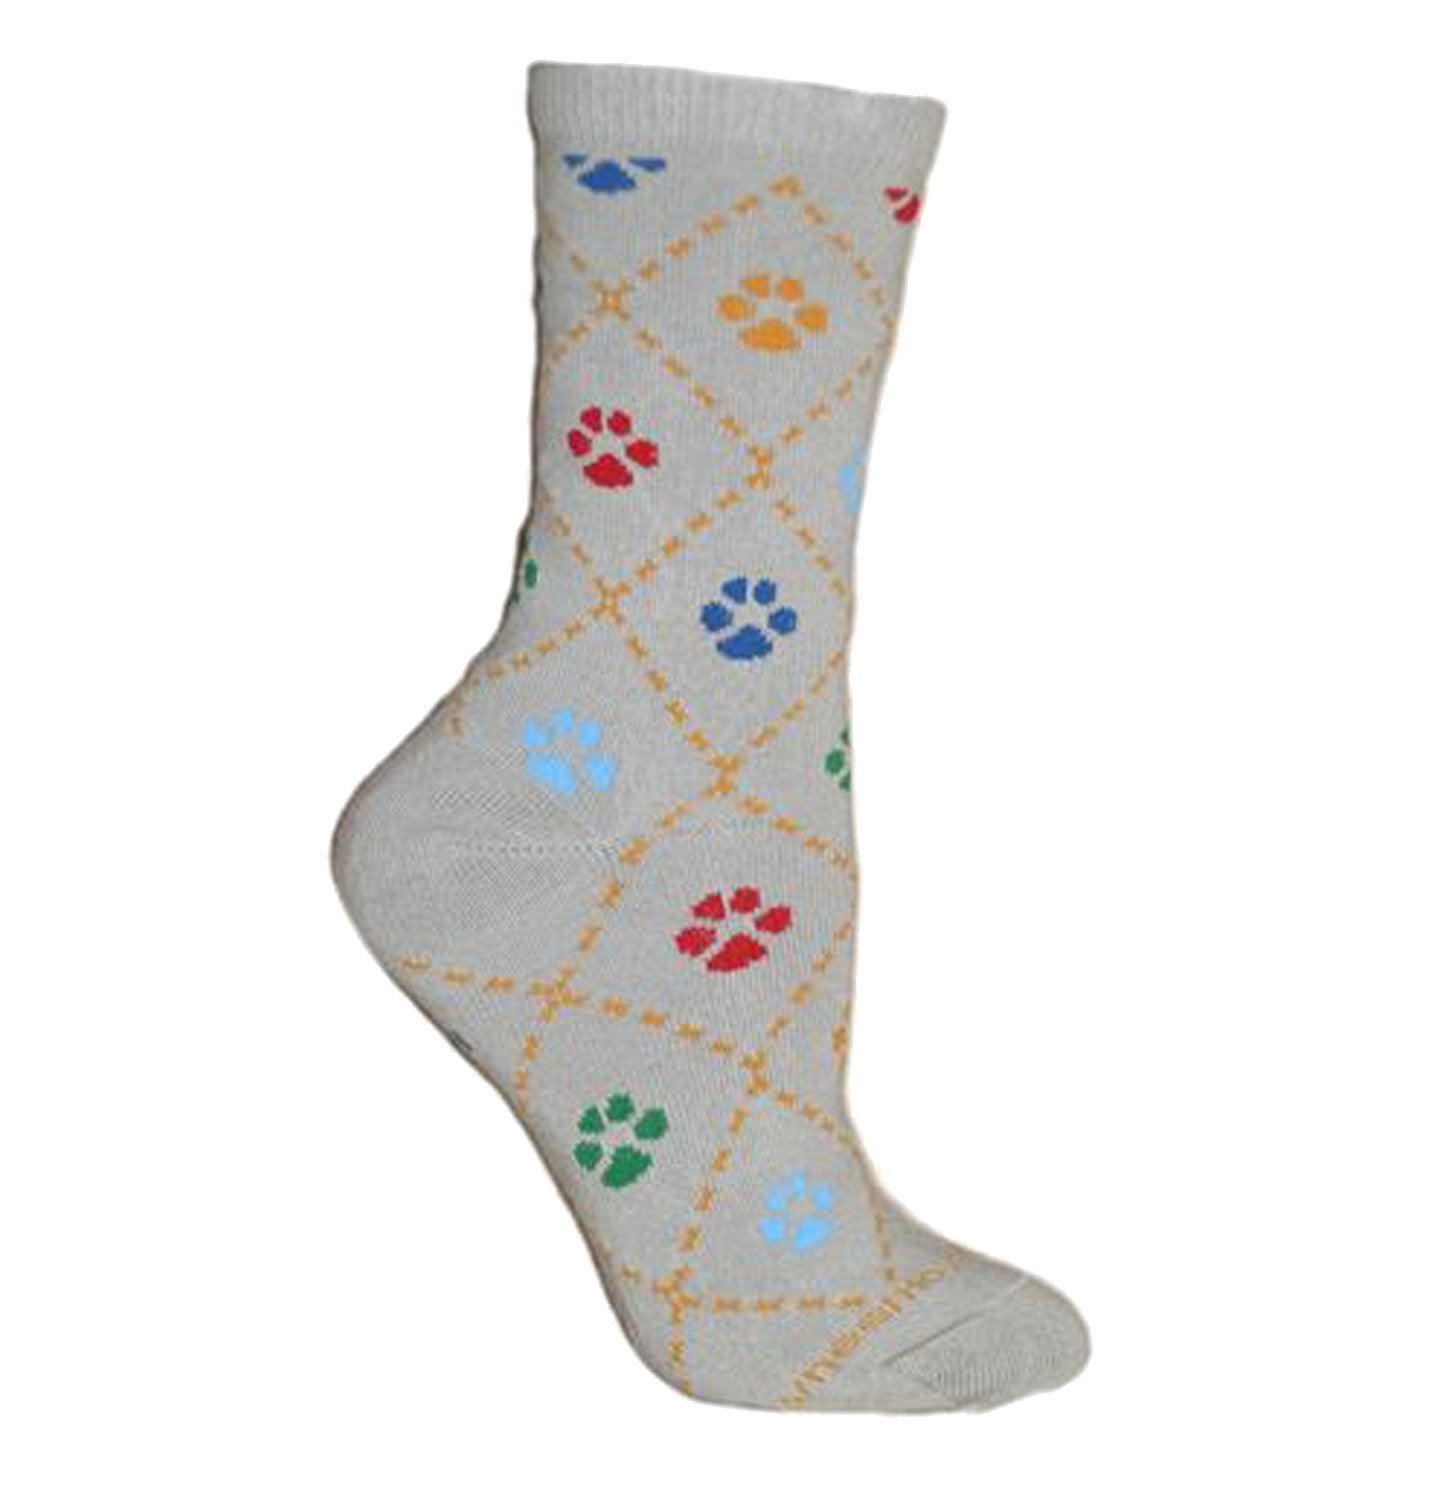 Colorful Dog Paws on Grey - Adult Cotton Crew Socks